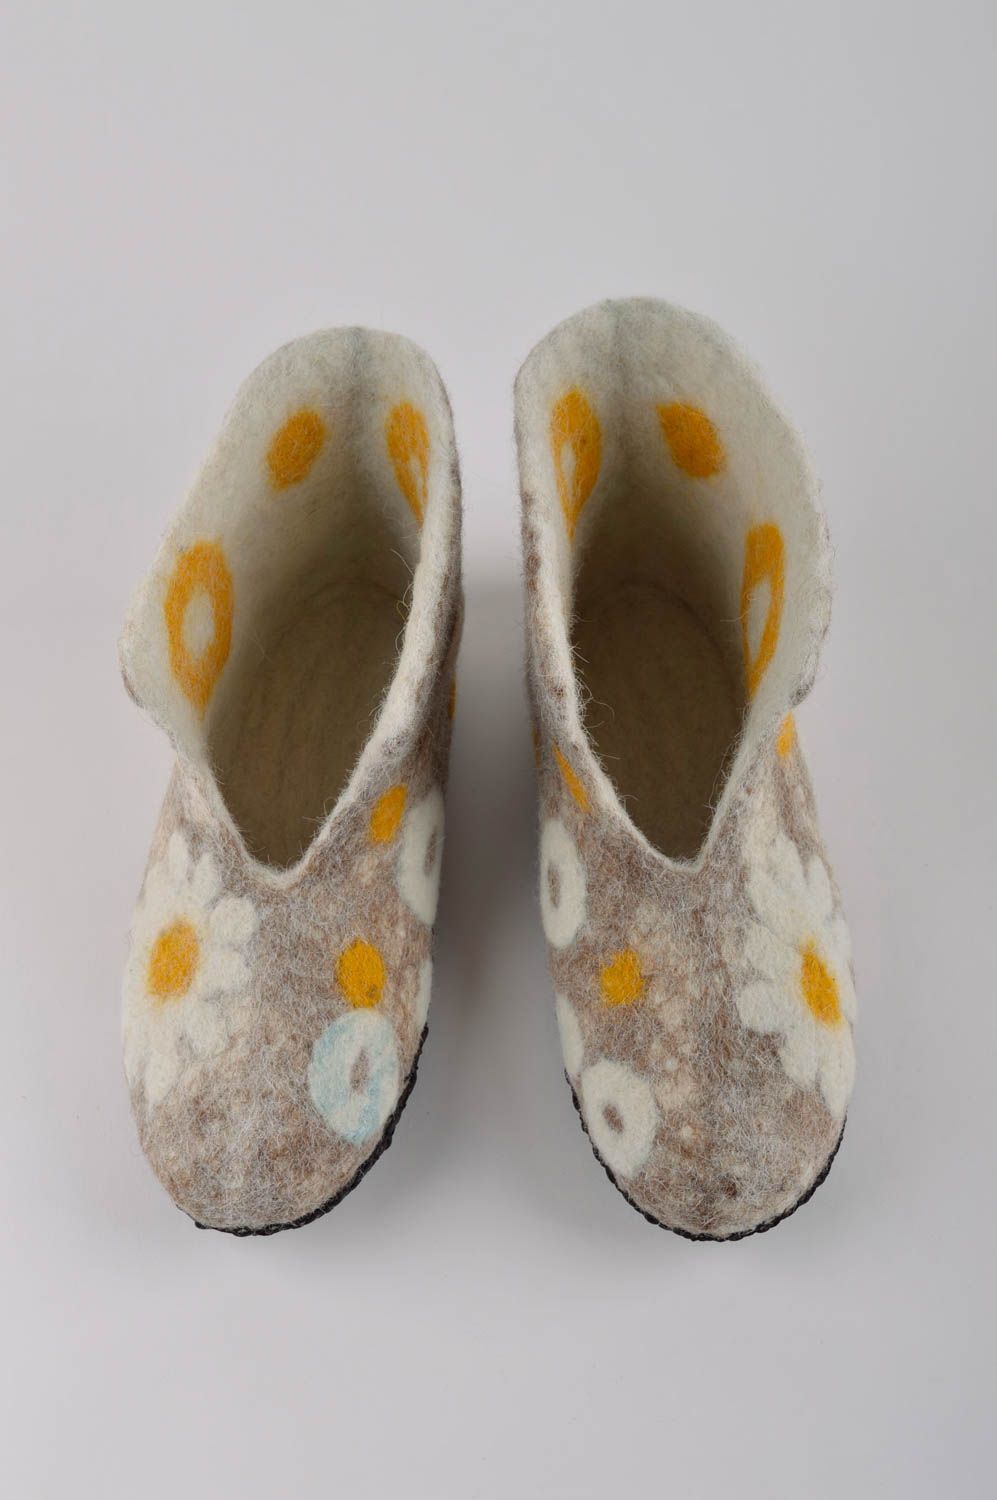 Handmade warm soft slippers designer cute home shoes stylish foorwear photo 5